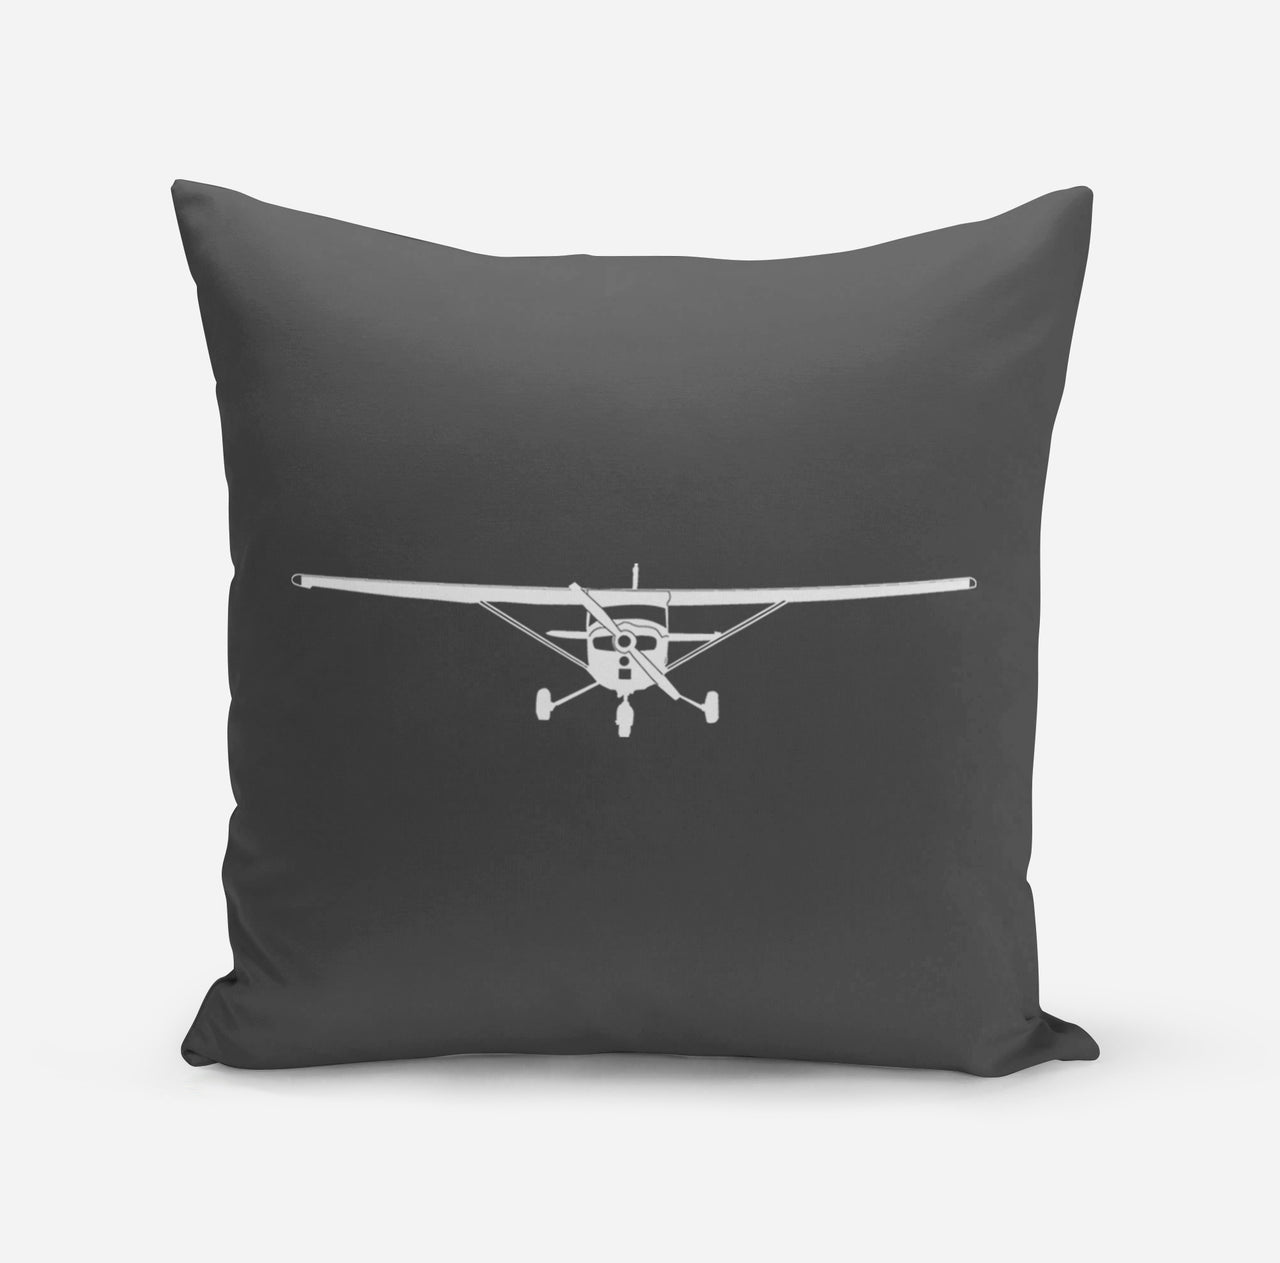 Cessna 172 Silhouette Designed Pillows